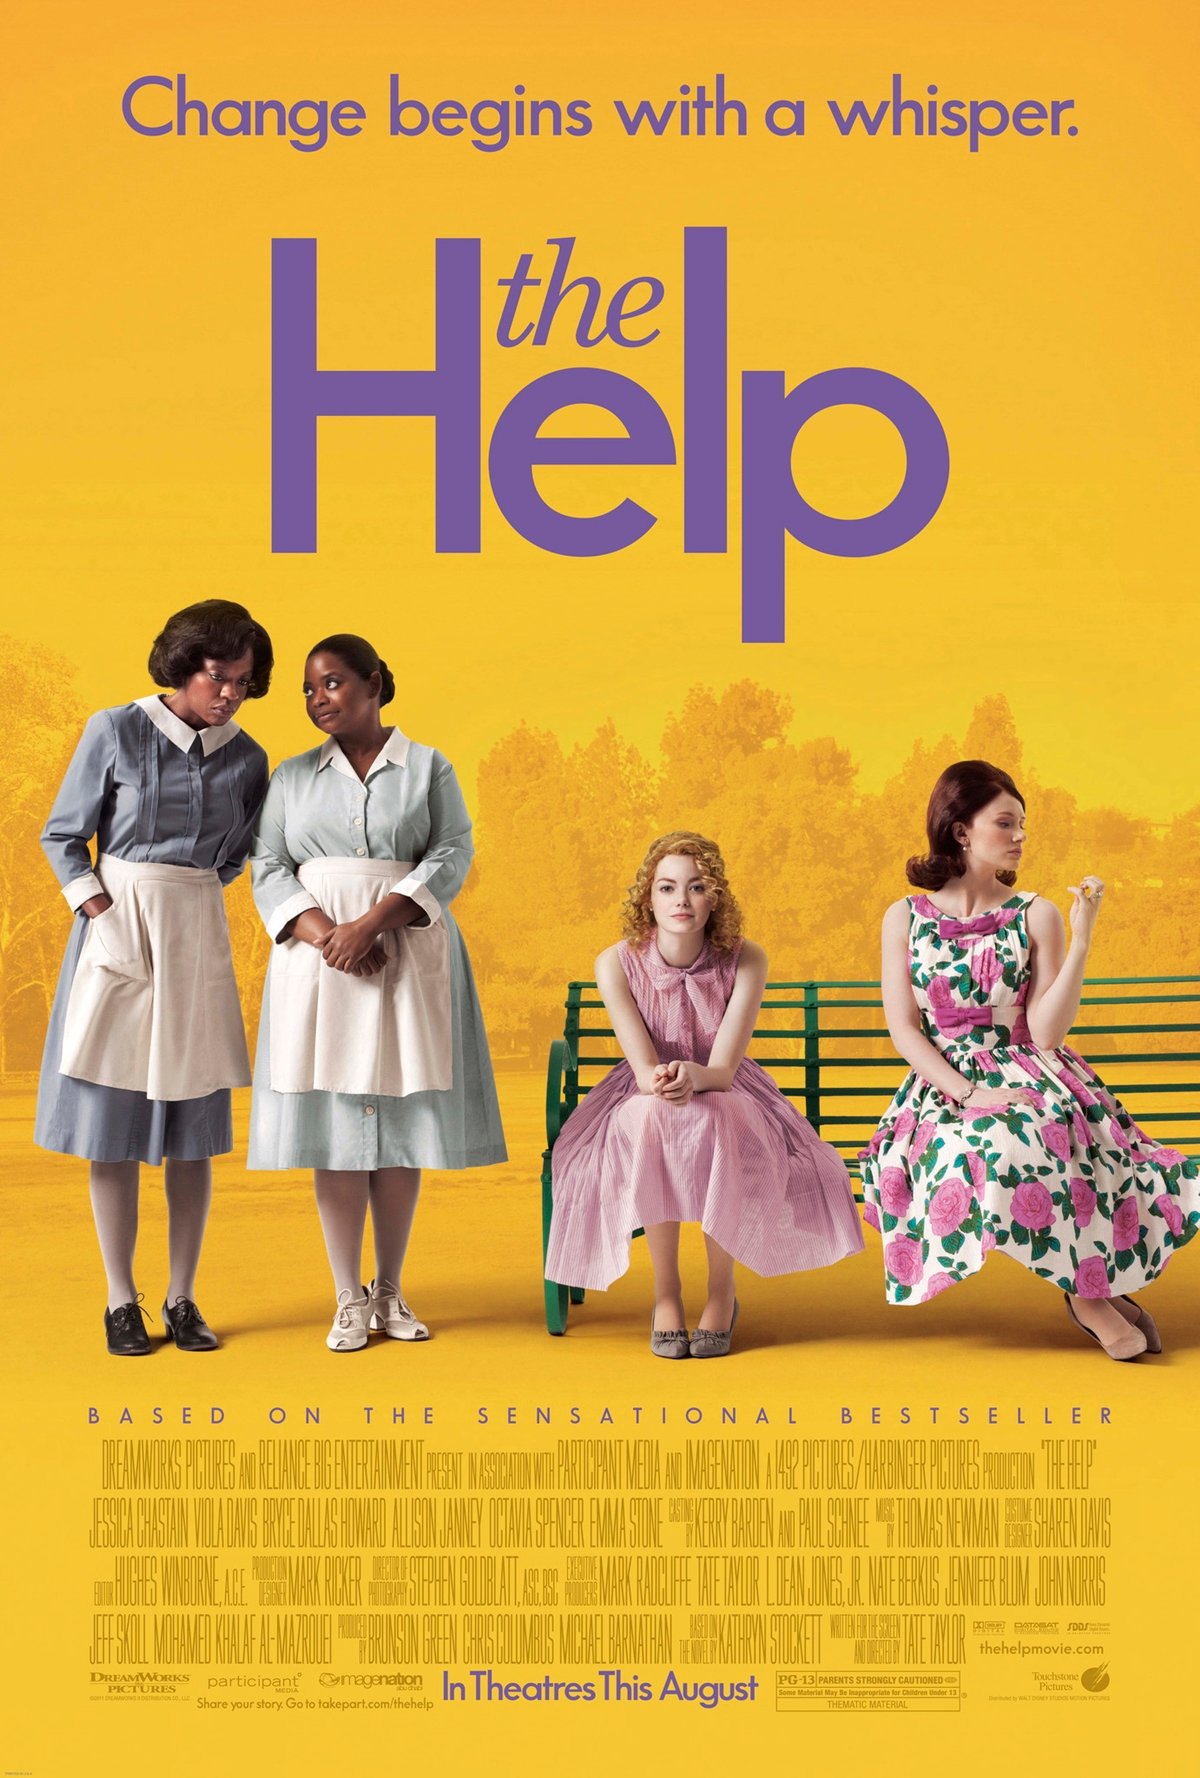 The 2011 period drama film The Help stars Jessica Chastain, Viola Davis, Cicely Tyson, Bryce Dallas Howard, Allison Janney, Octavia Spencer, and Emma Stone